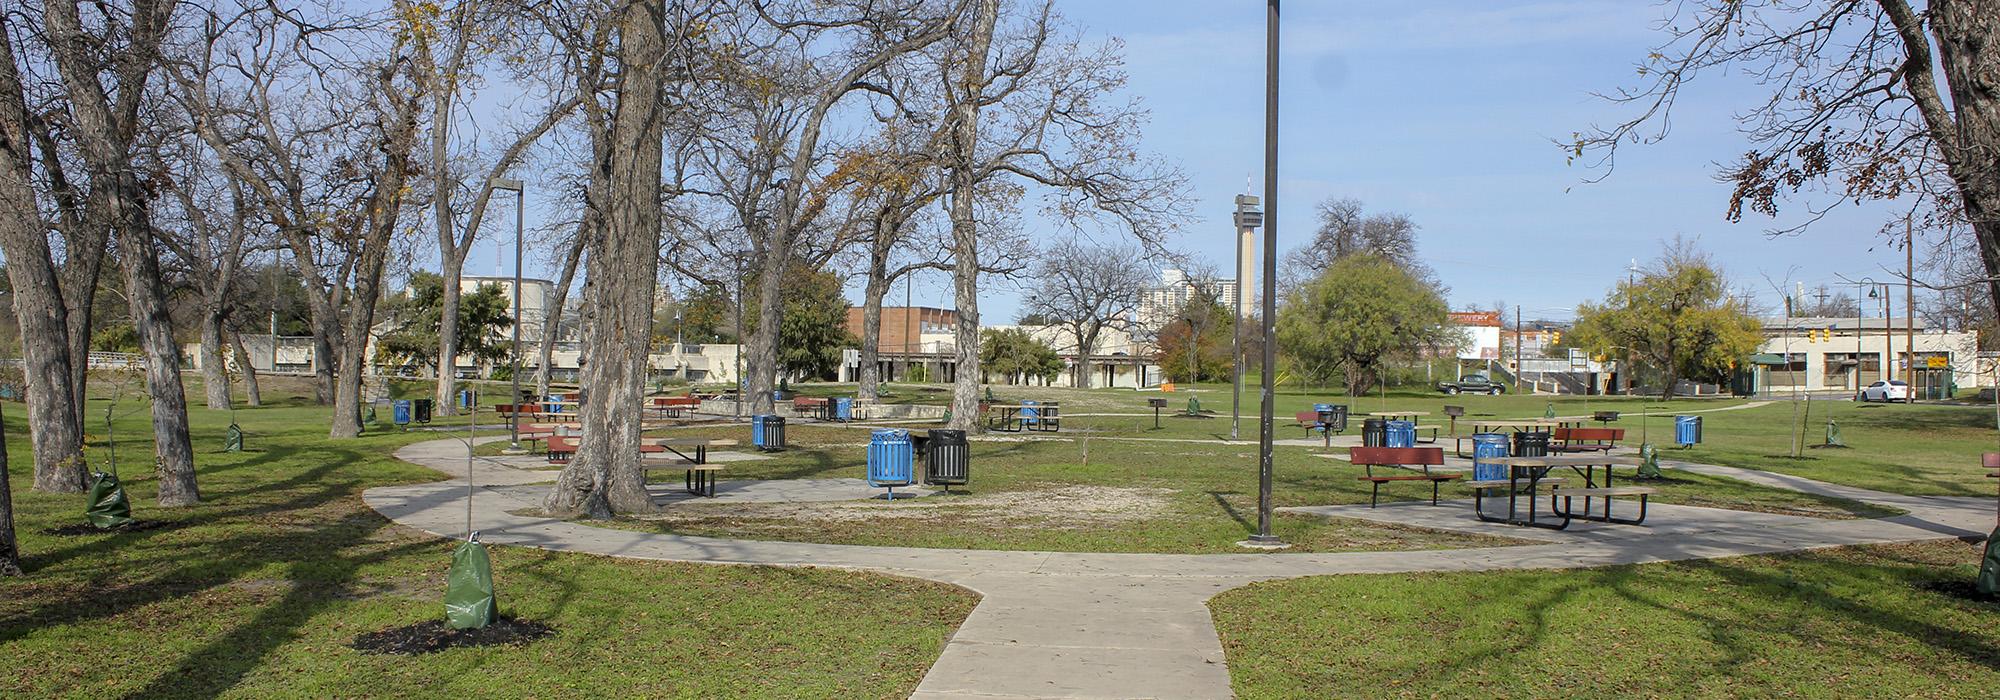 Roosevelt Park, San Antonio, TX